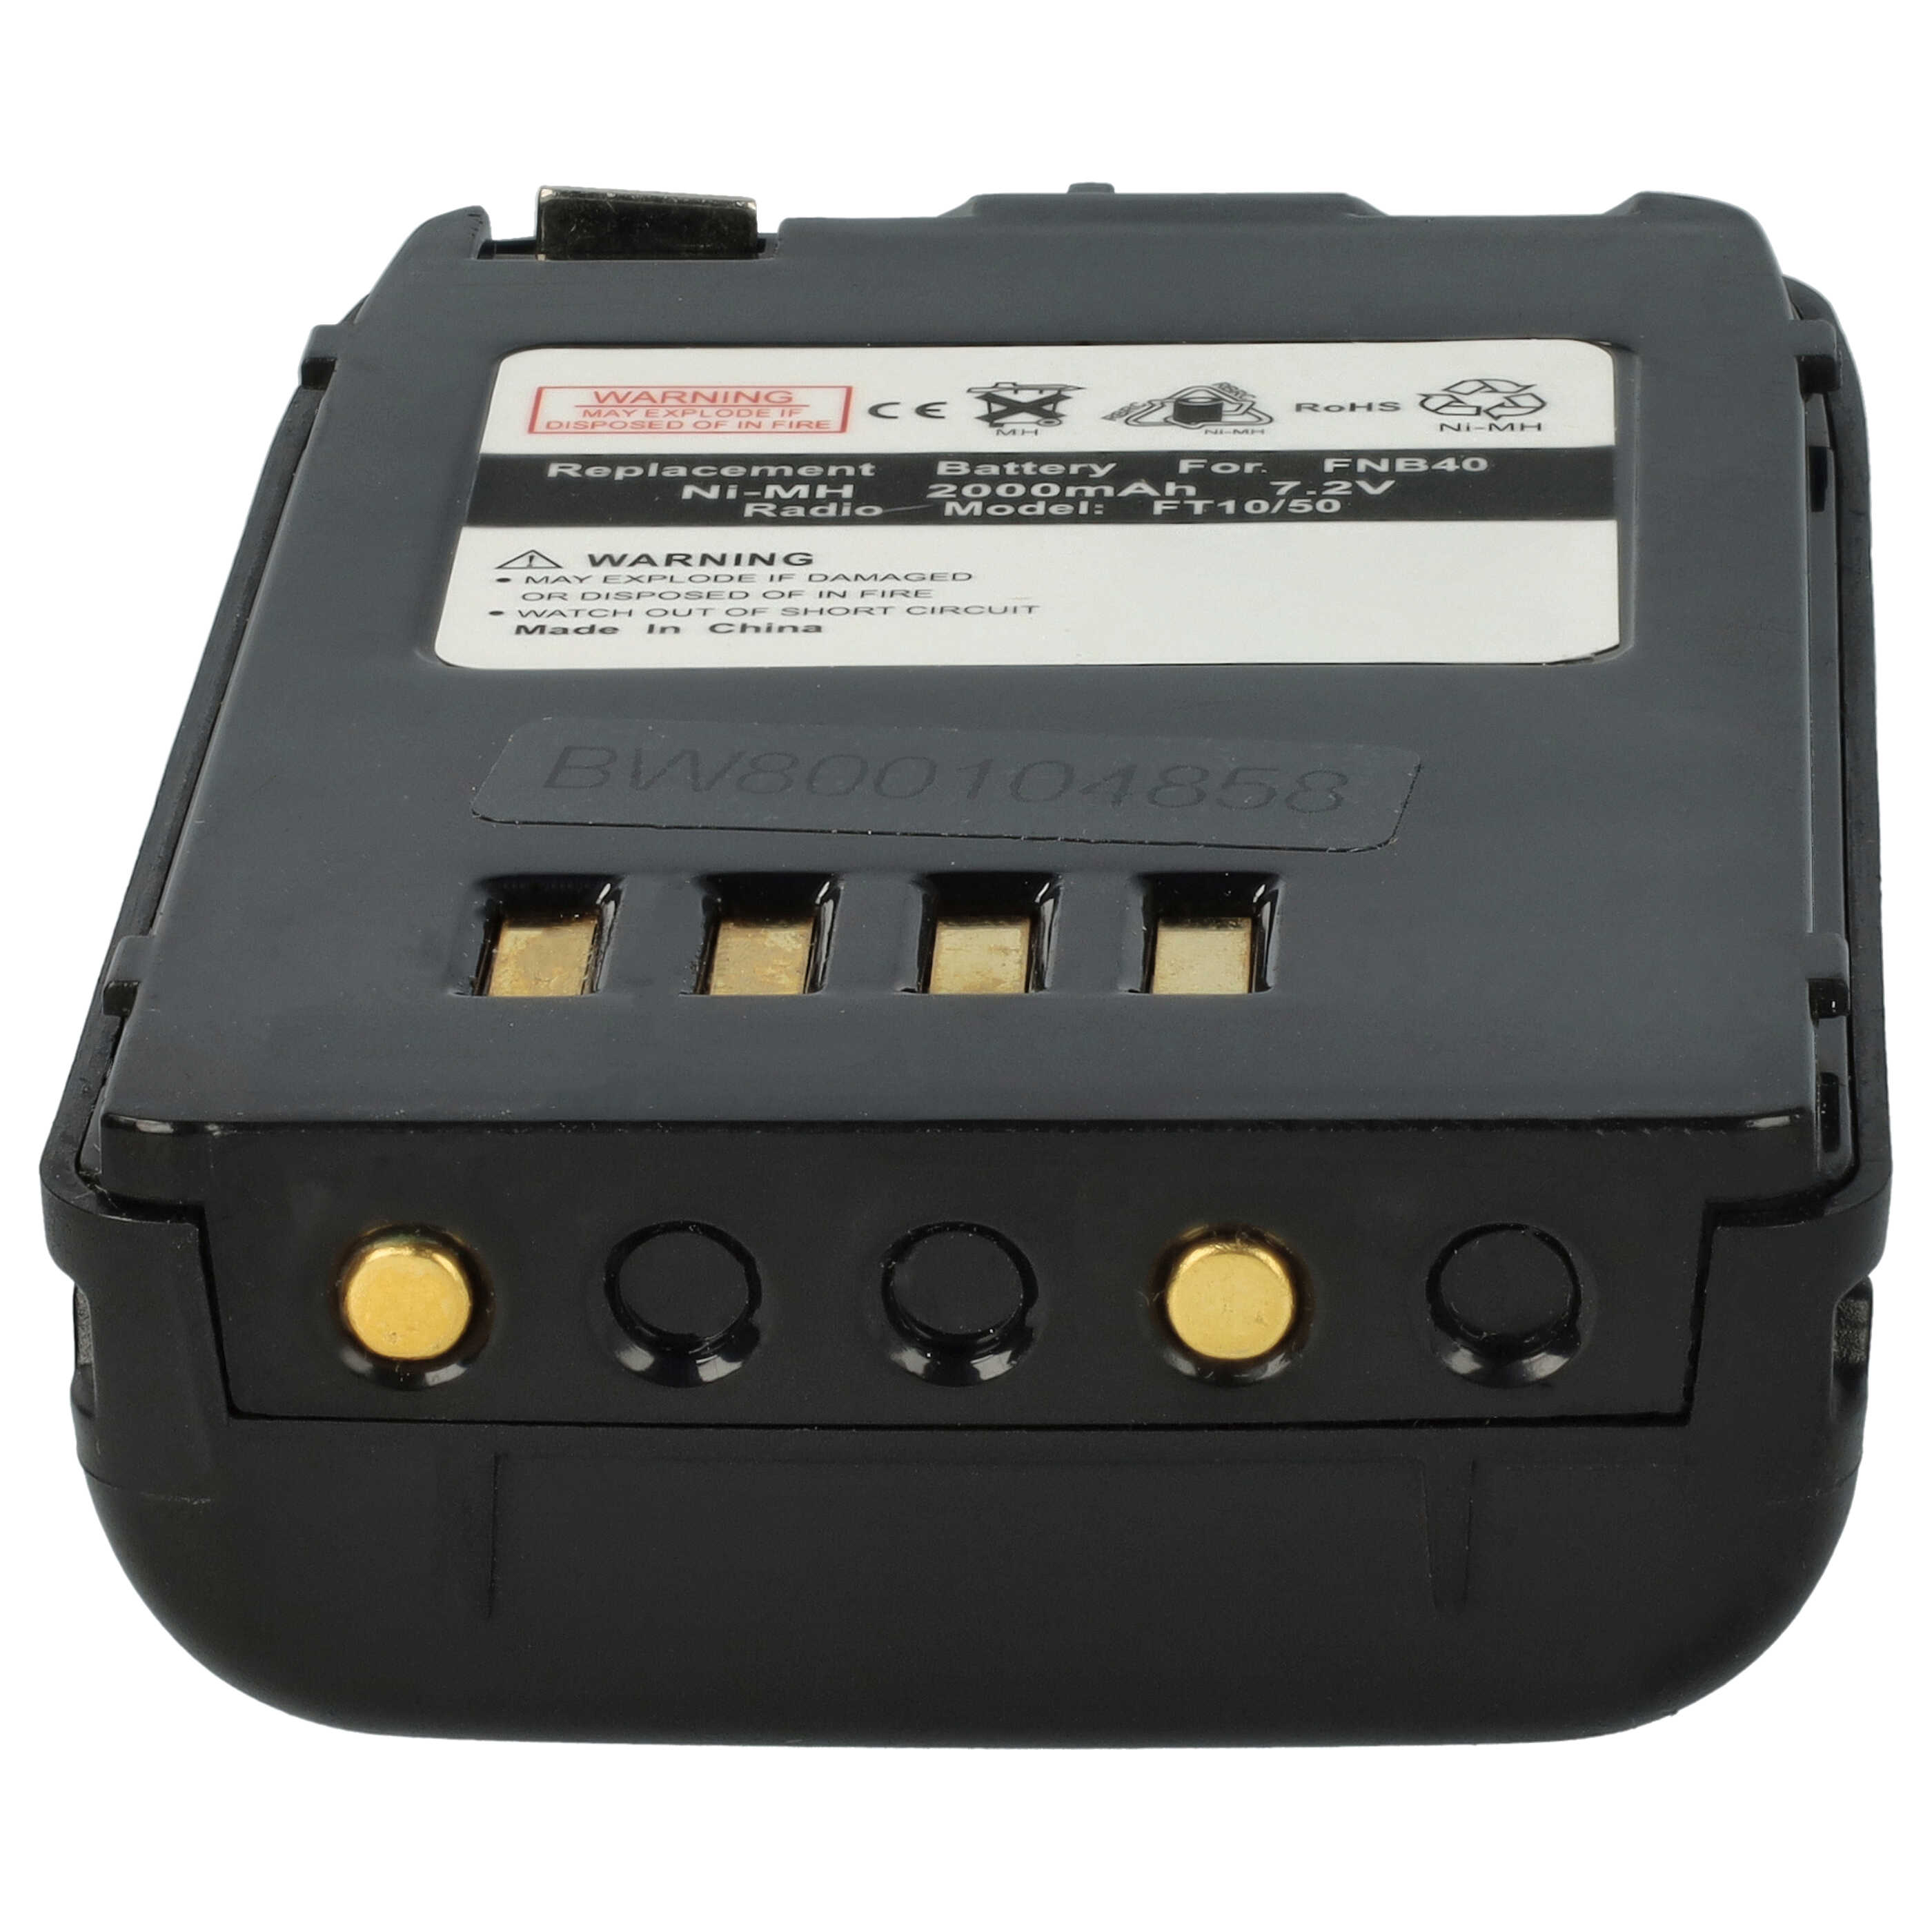 Batterie remplace FNB-V47 pour radio talkie-walkie - 2000mAh 7,2V NiMH